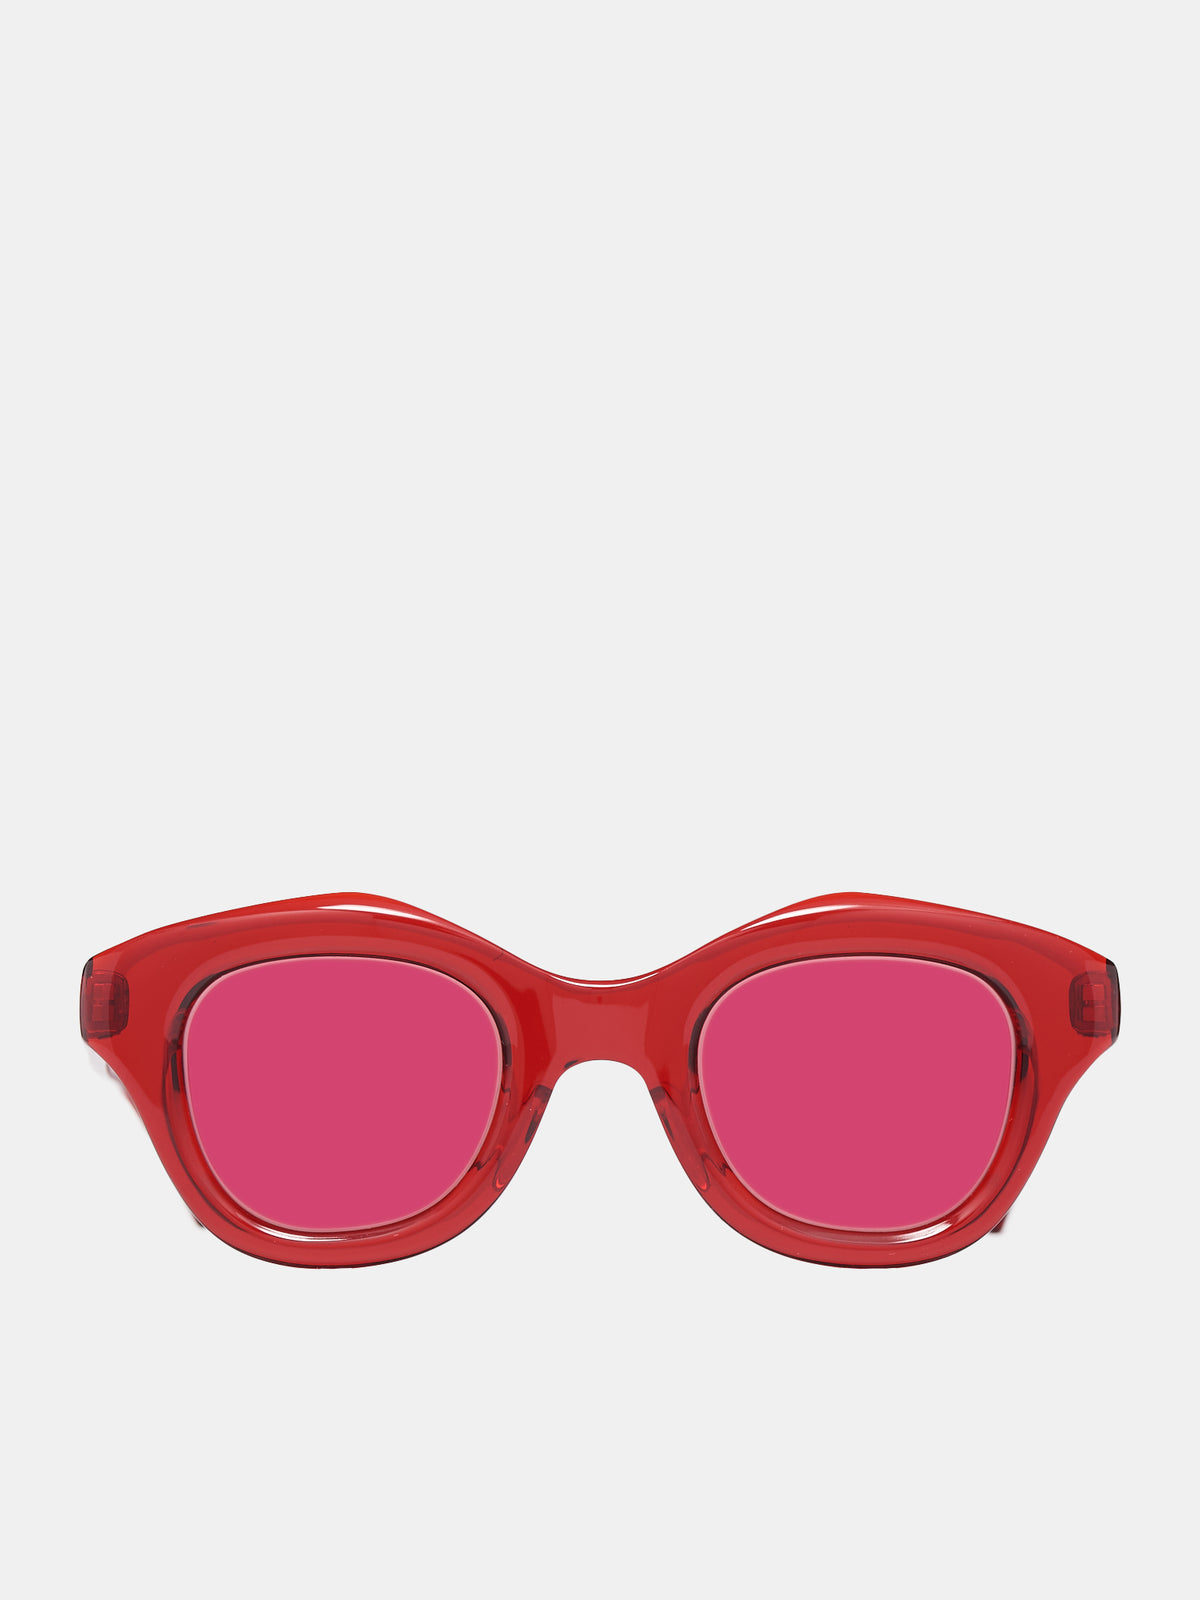 Hook Sunglasses (HOOK-CRYSTAL-RED-23R)